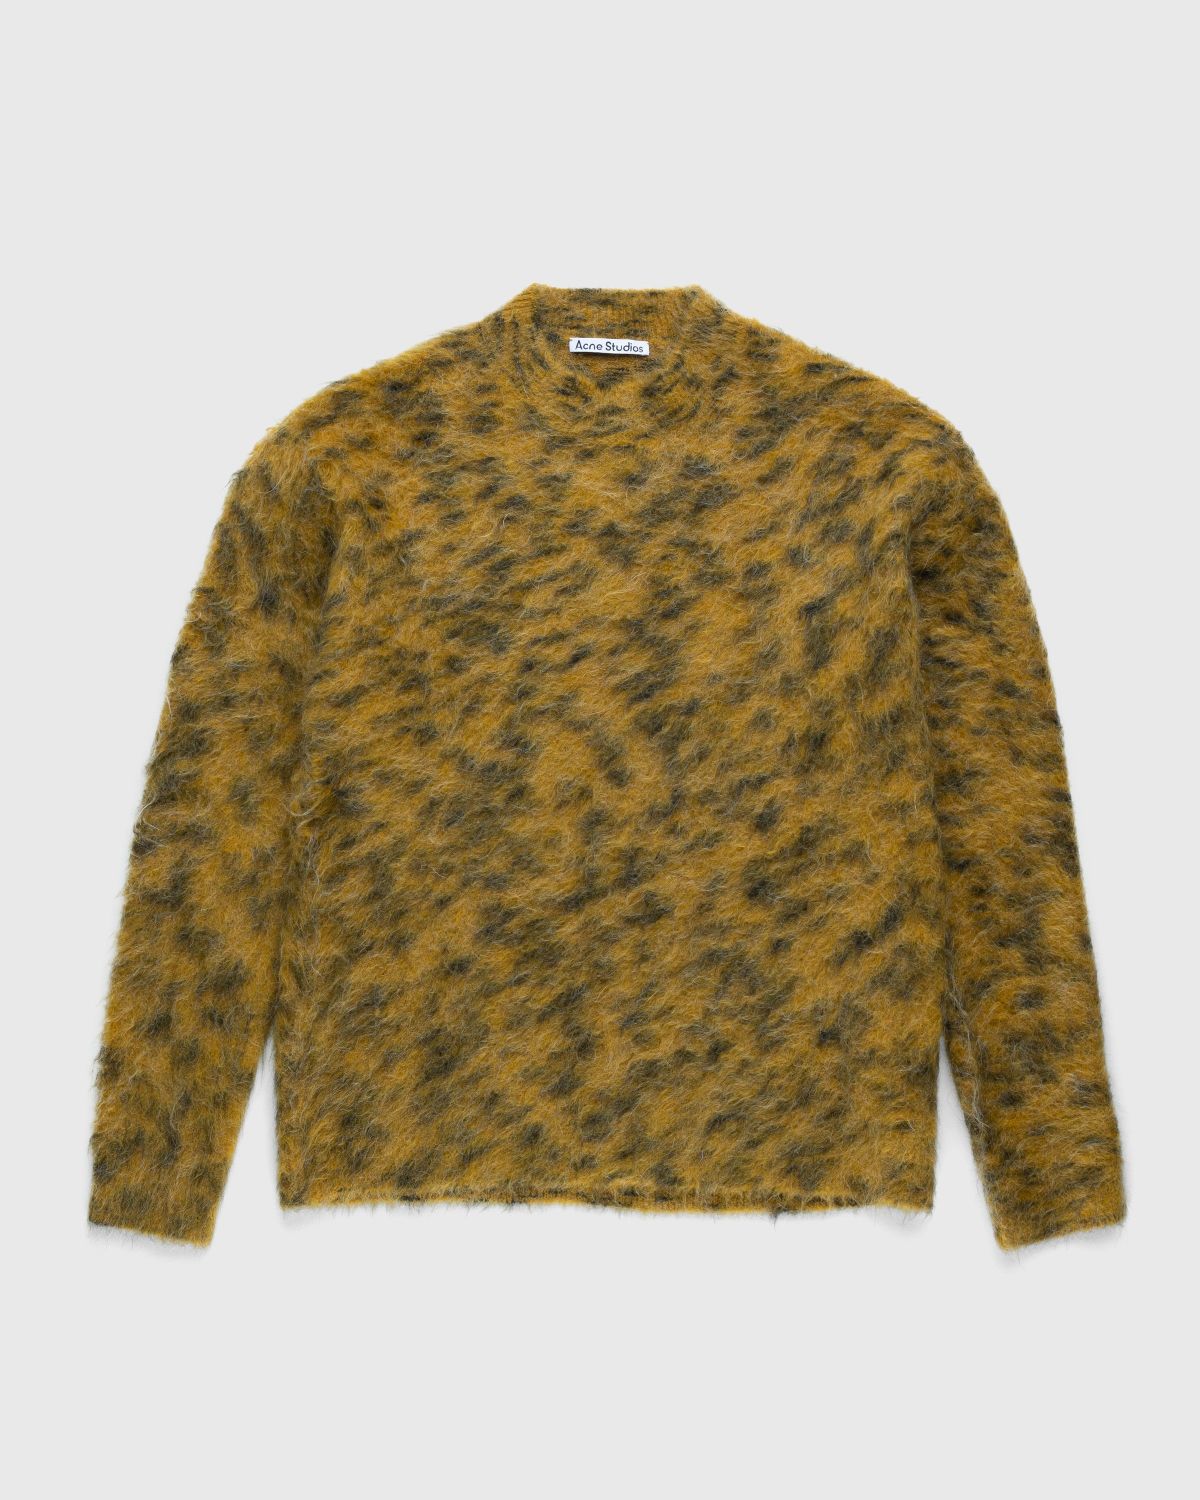 Acne Studios – Hairy Crewneck Sweater Yellow - Knitwear - Yellow - Image 1